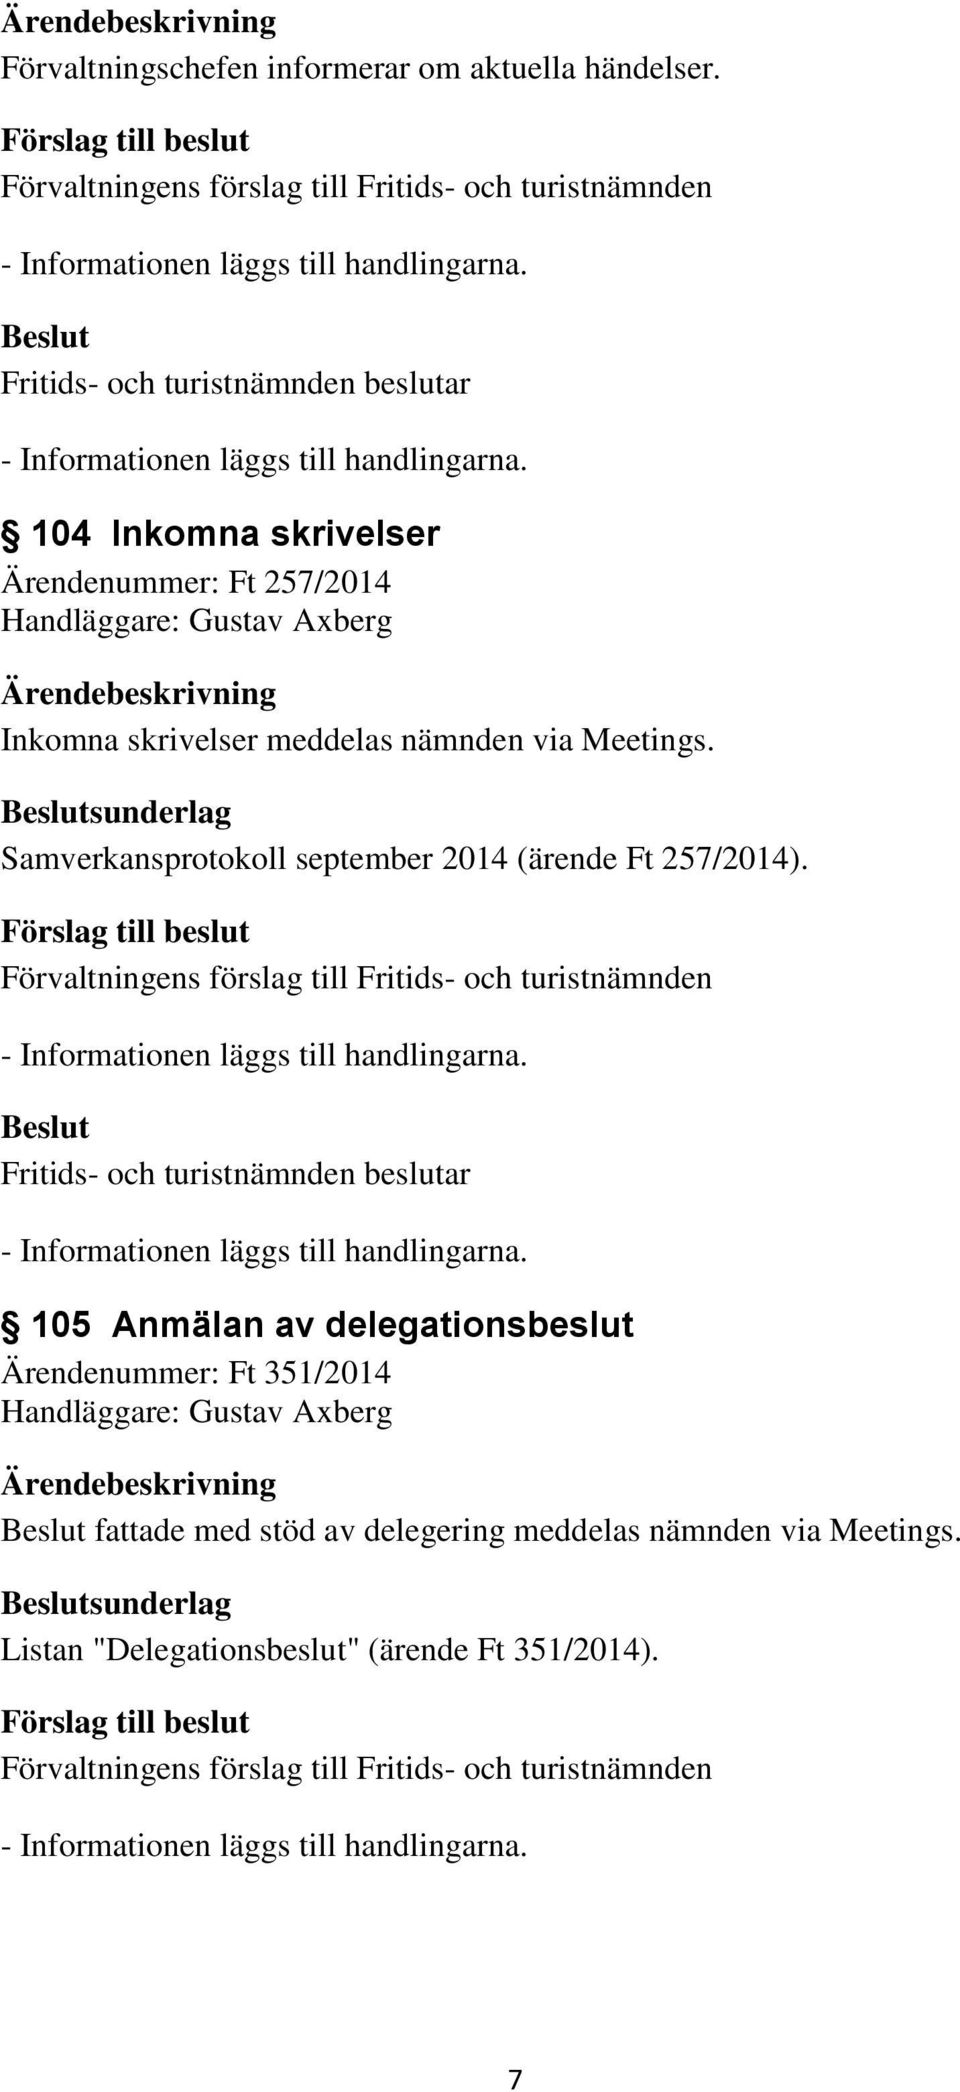 via Meetings. sunderlag Samverkansprotokoll september 2014 (ärende Ft 257/2014).